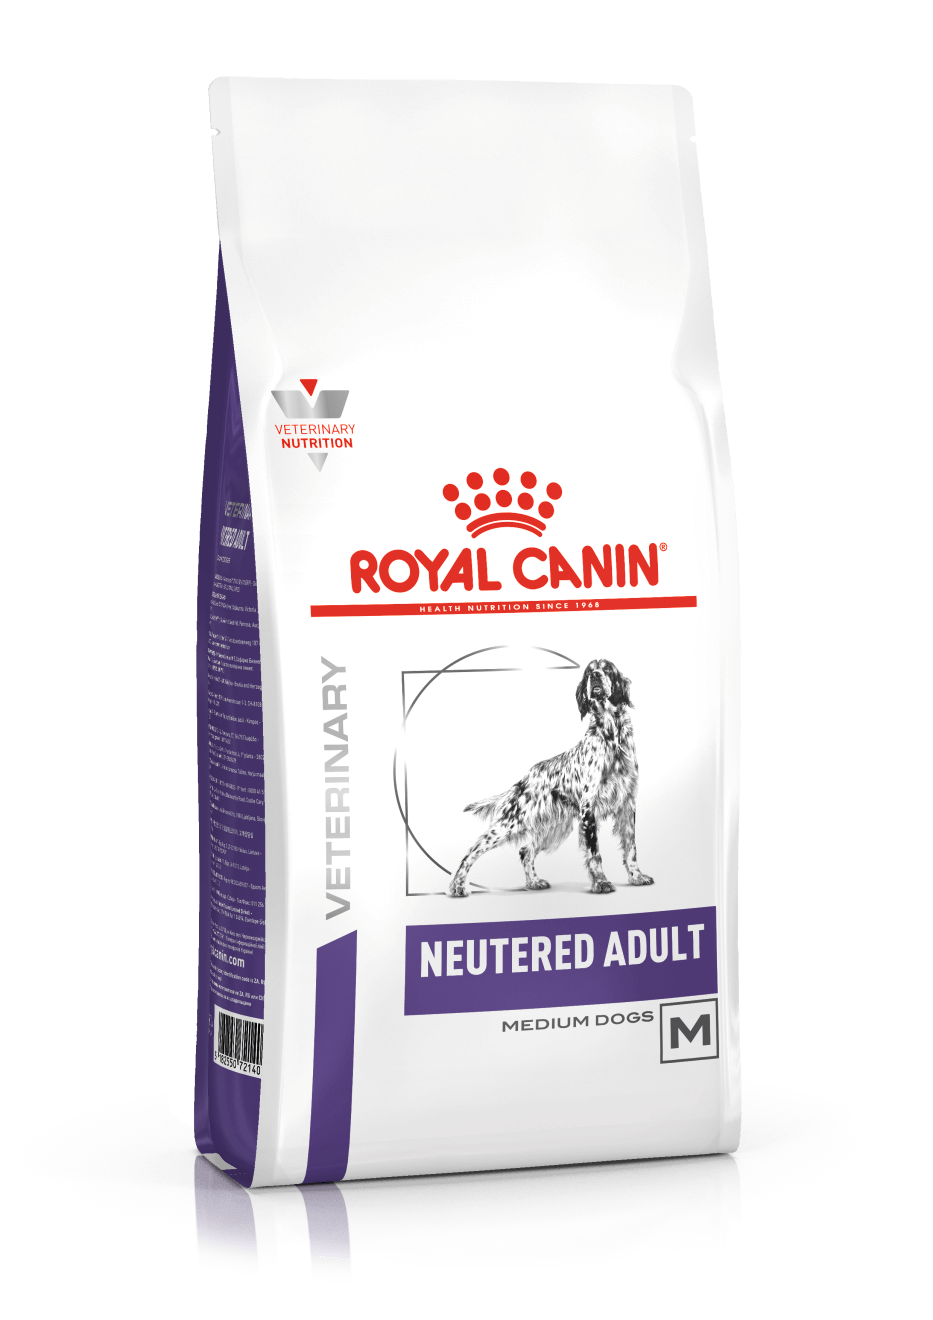 Royal Canin Neutered Adult Medium Dog™ Kibbles for